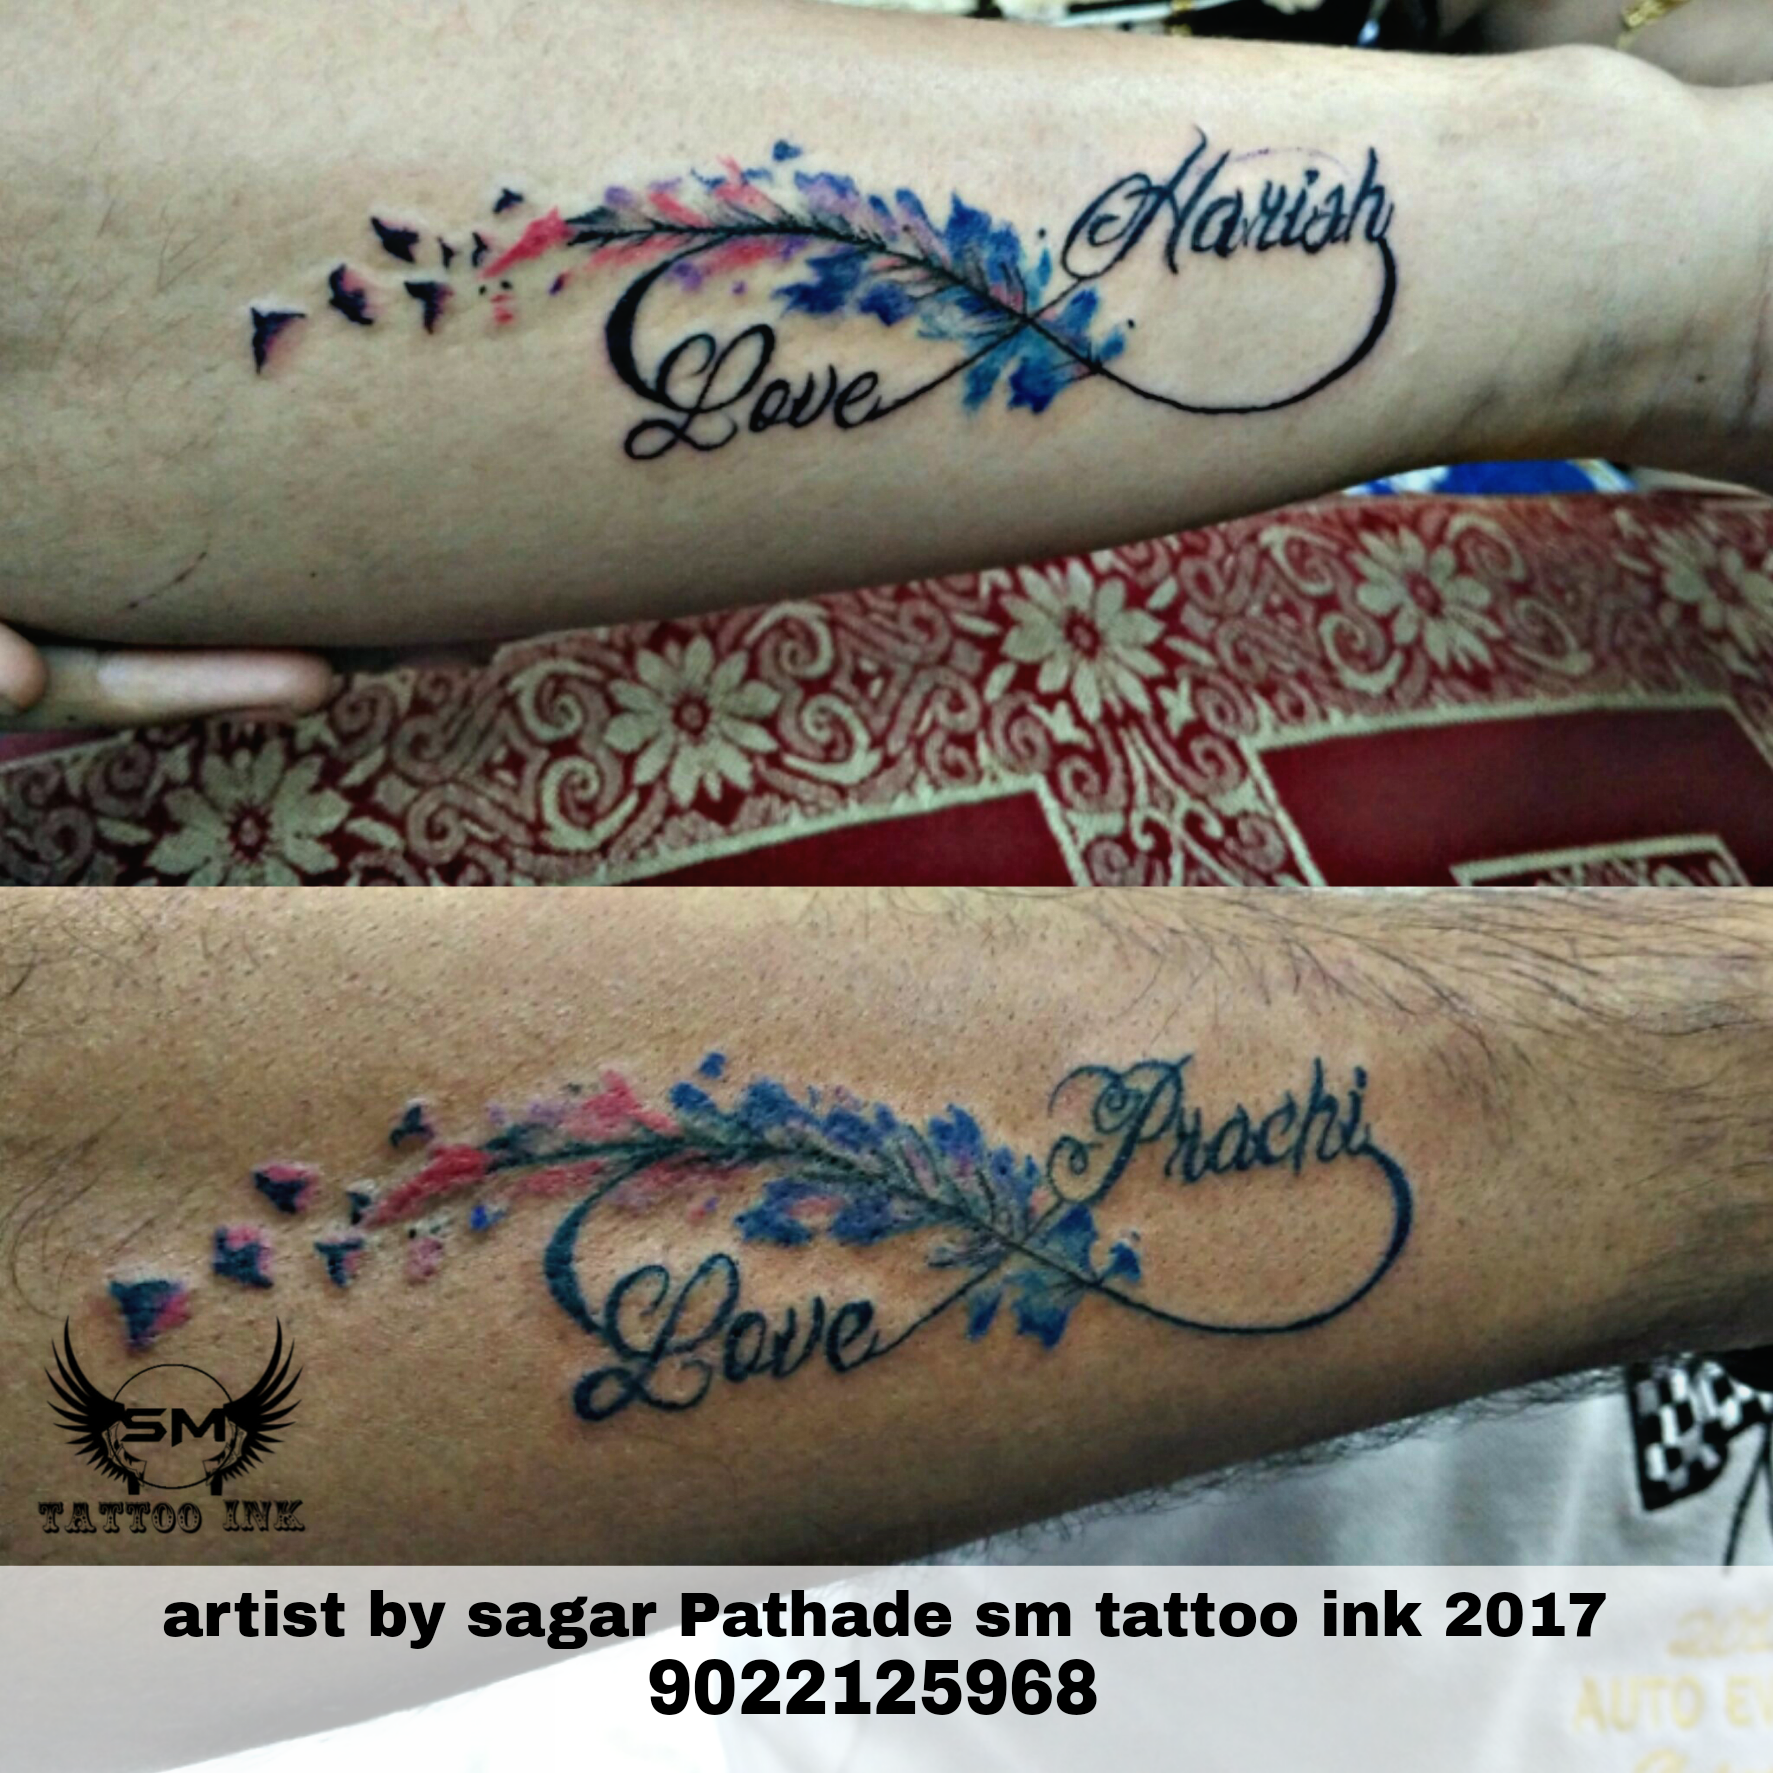 SM tattoo design mehndi  stylish mehndi design for hand  new mehndi  tattoo  YouTube